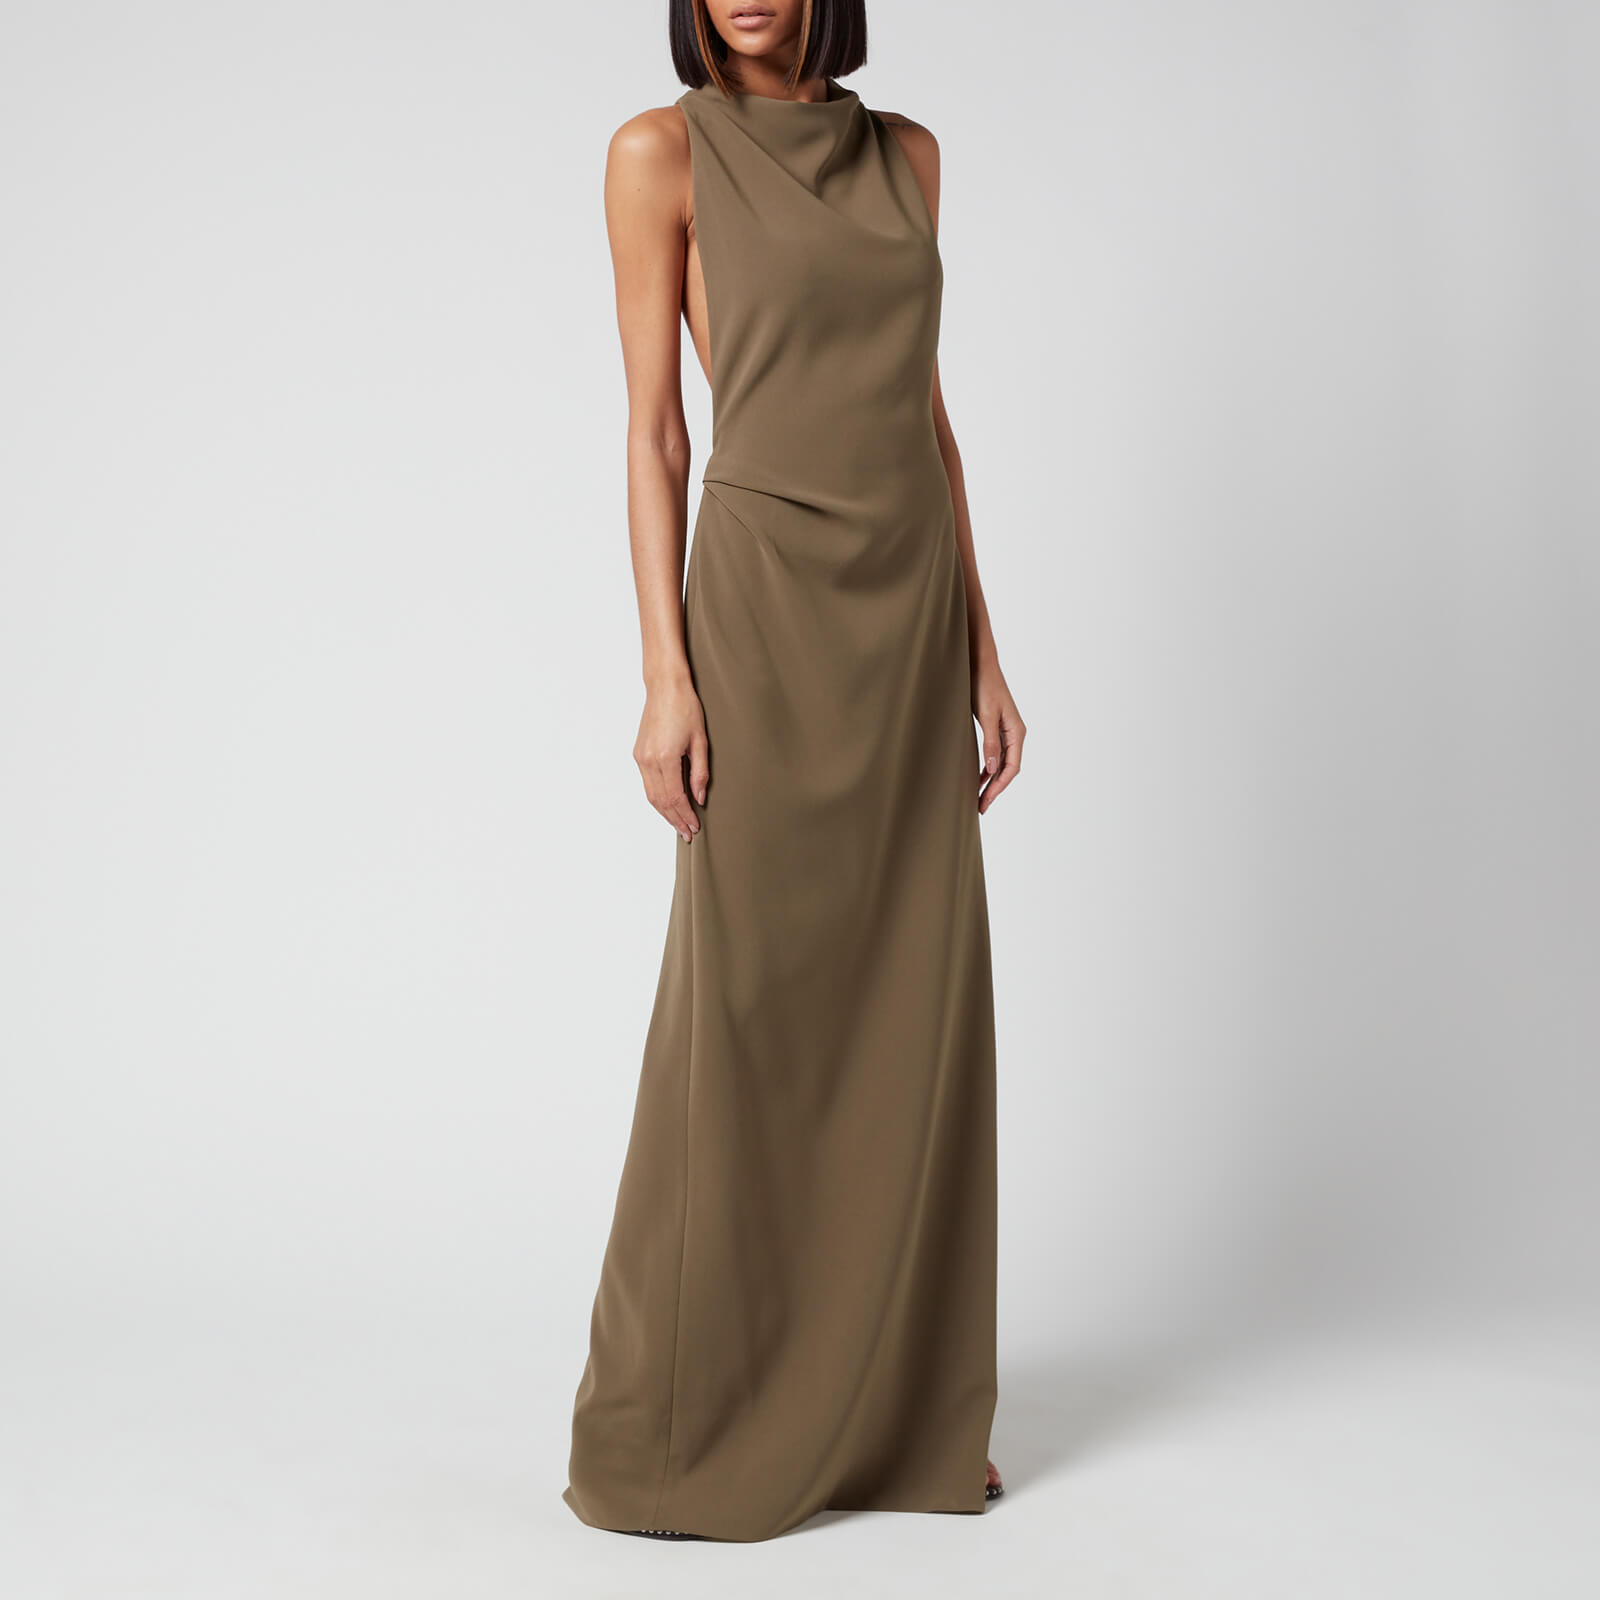 Proenza Schouler Women's Matte Crepe Backless Dress - Mushroom - US 6/UK 10